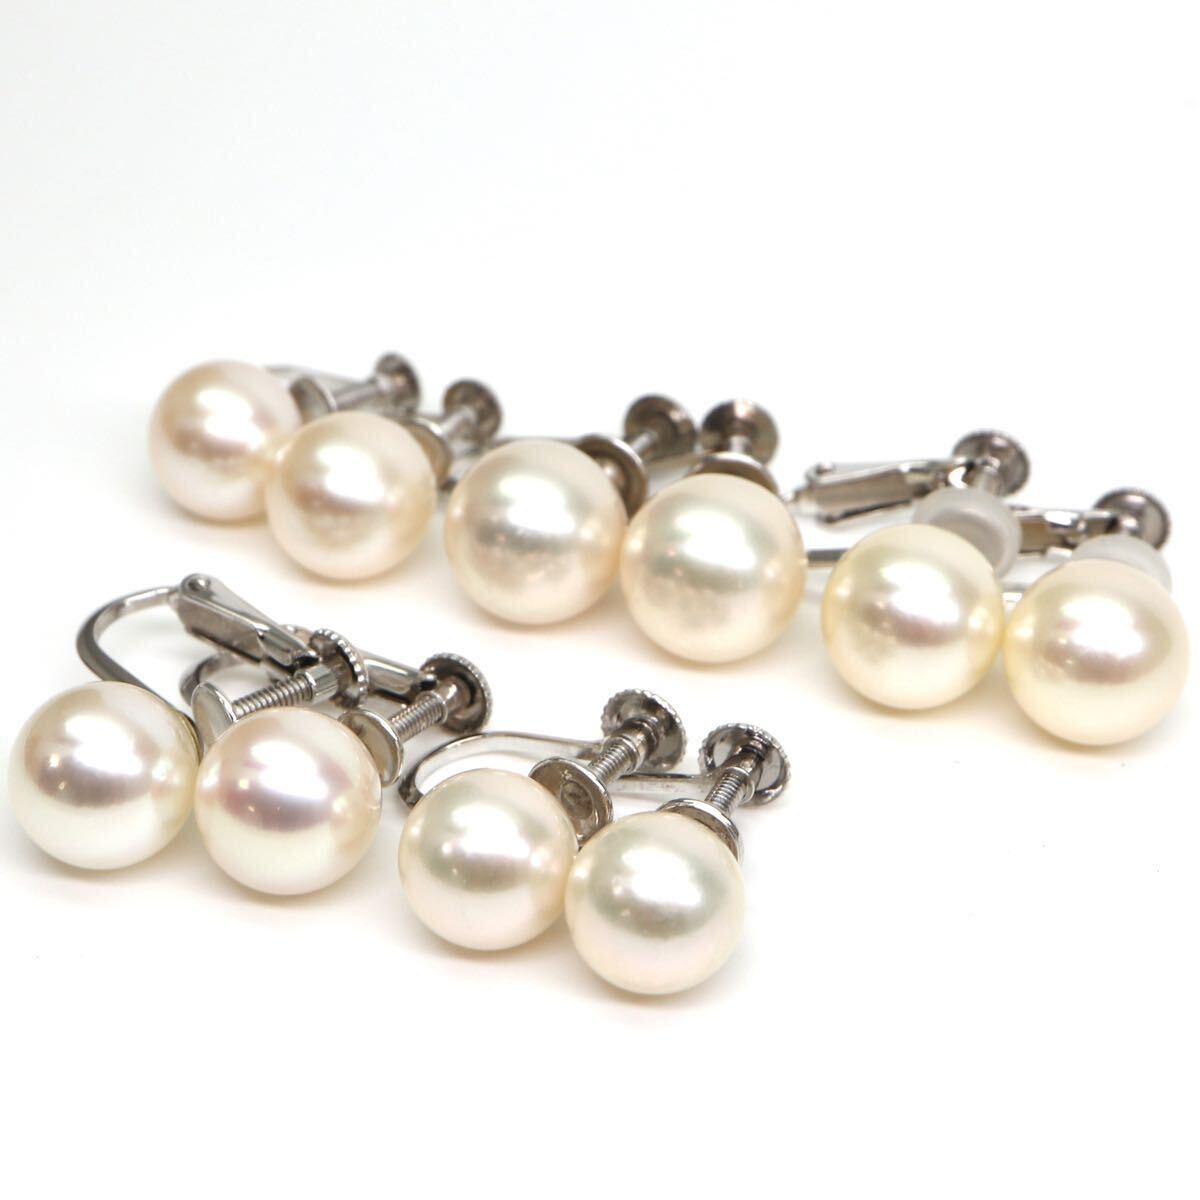 ◆Pt900/K18 アコヤ本真珠 イヤリング5点おまとめ◆A 13.6g 7.5-8.5mm珠 パール pearl ジュエリー earring pierce jewelry EC4の画像1